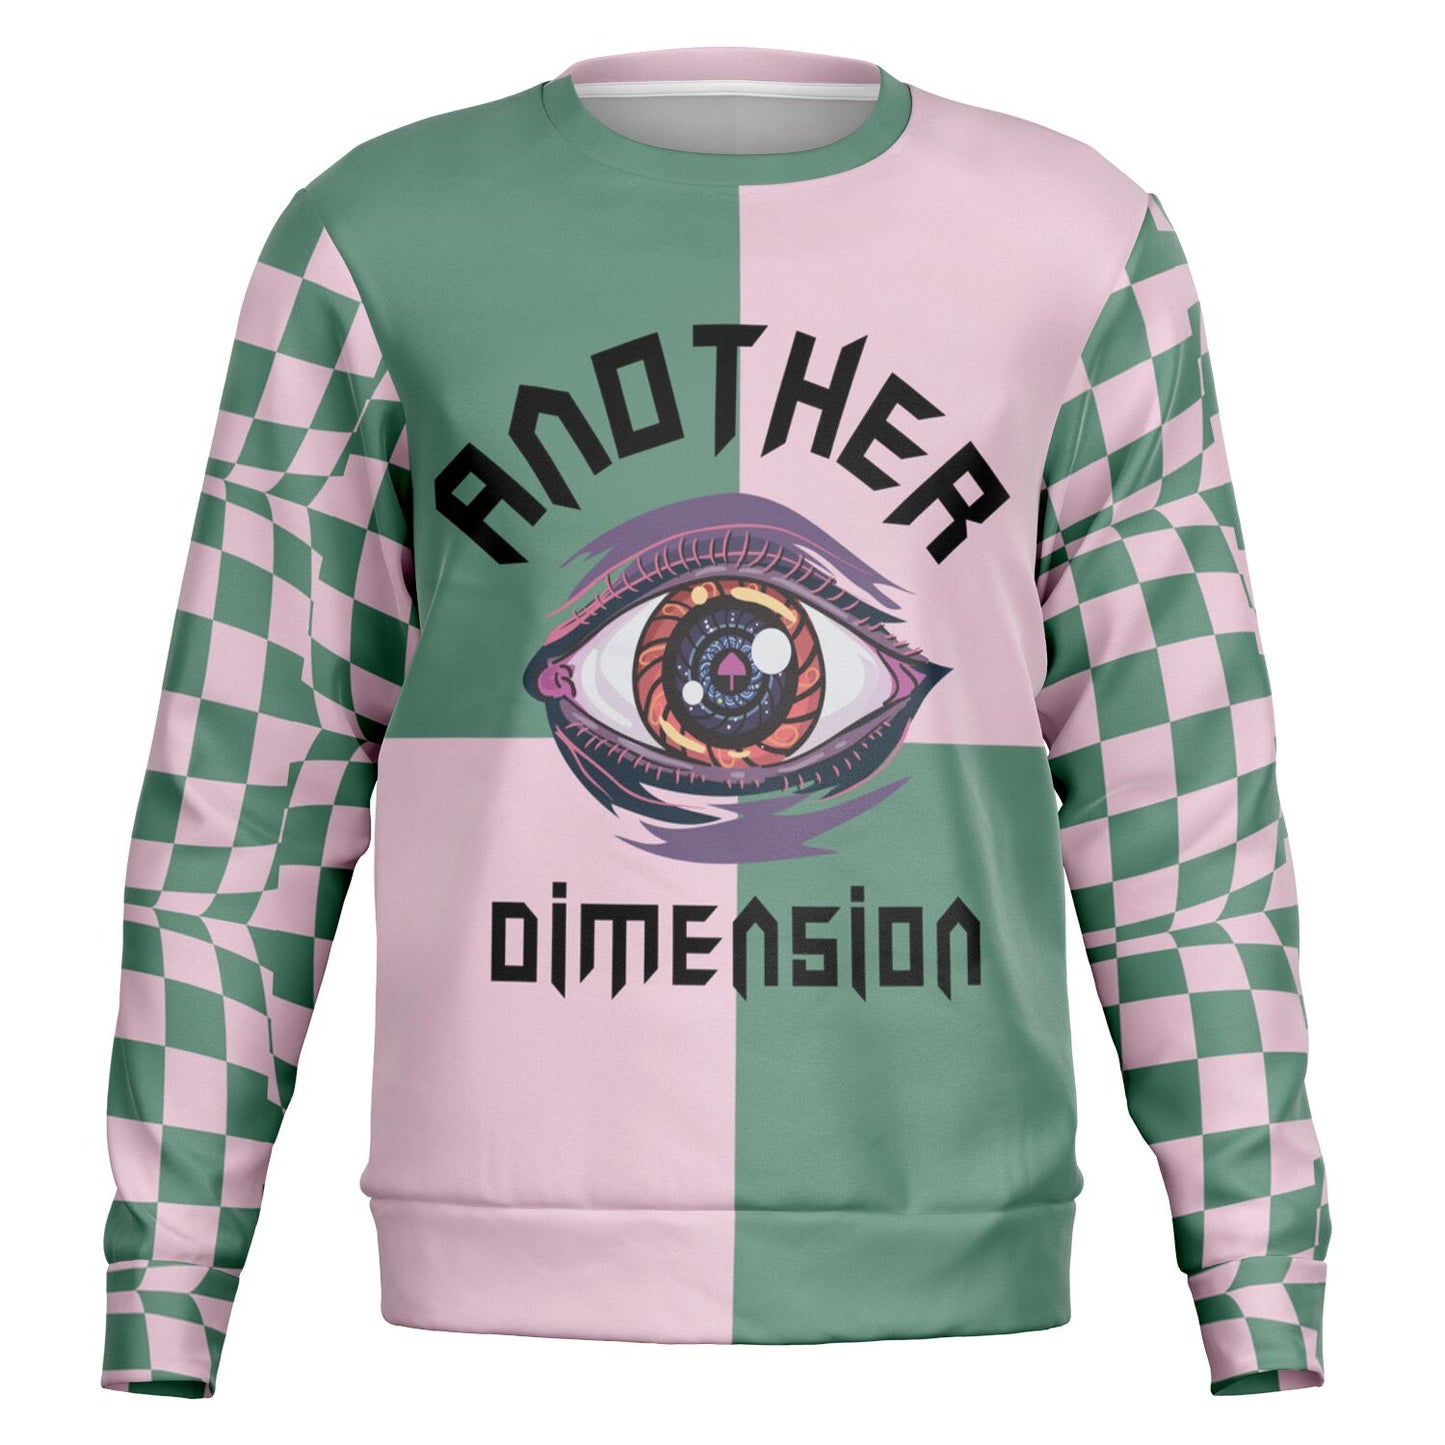 ANOTHER DIMENSION - Full Print Sweatshirt